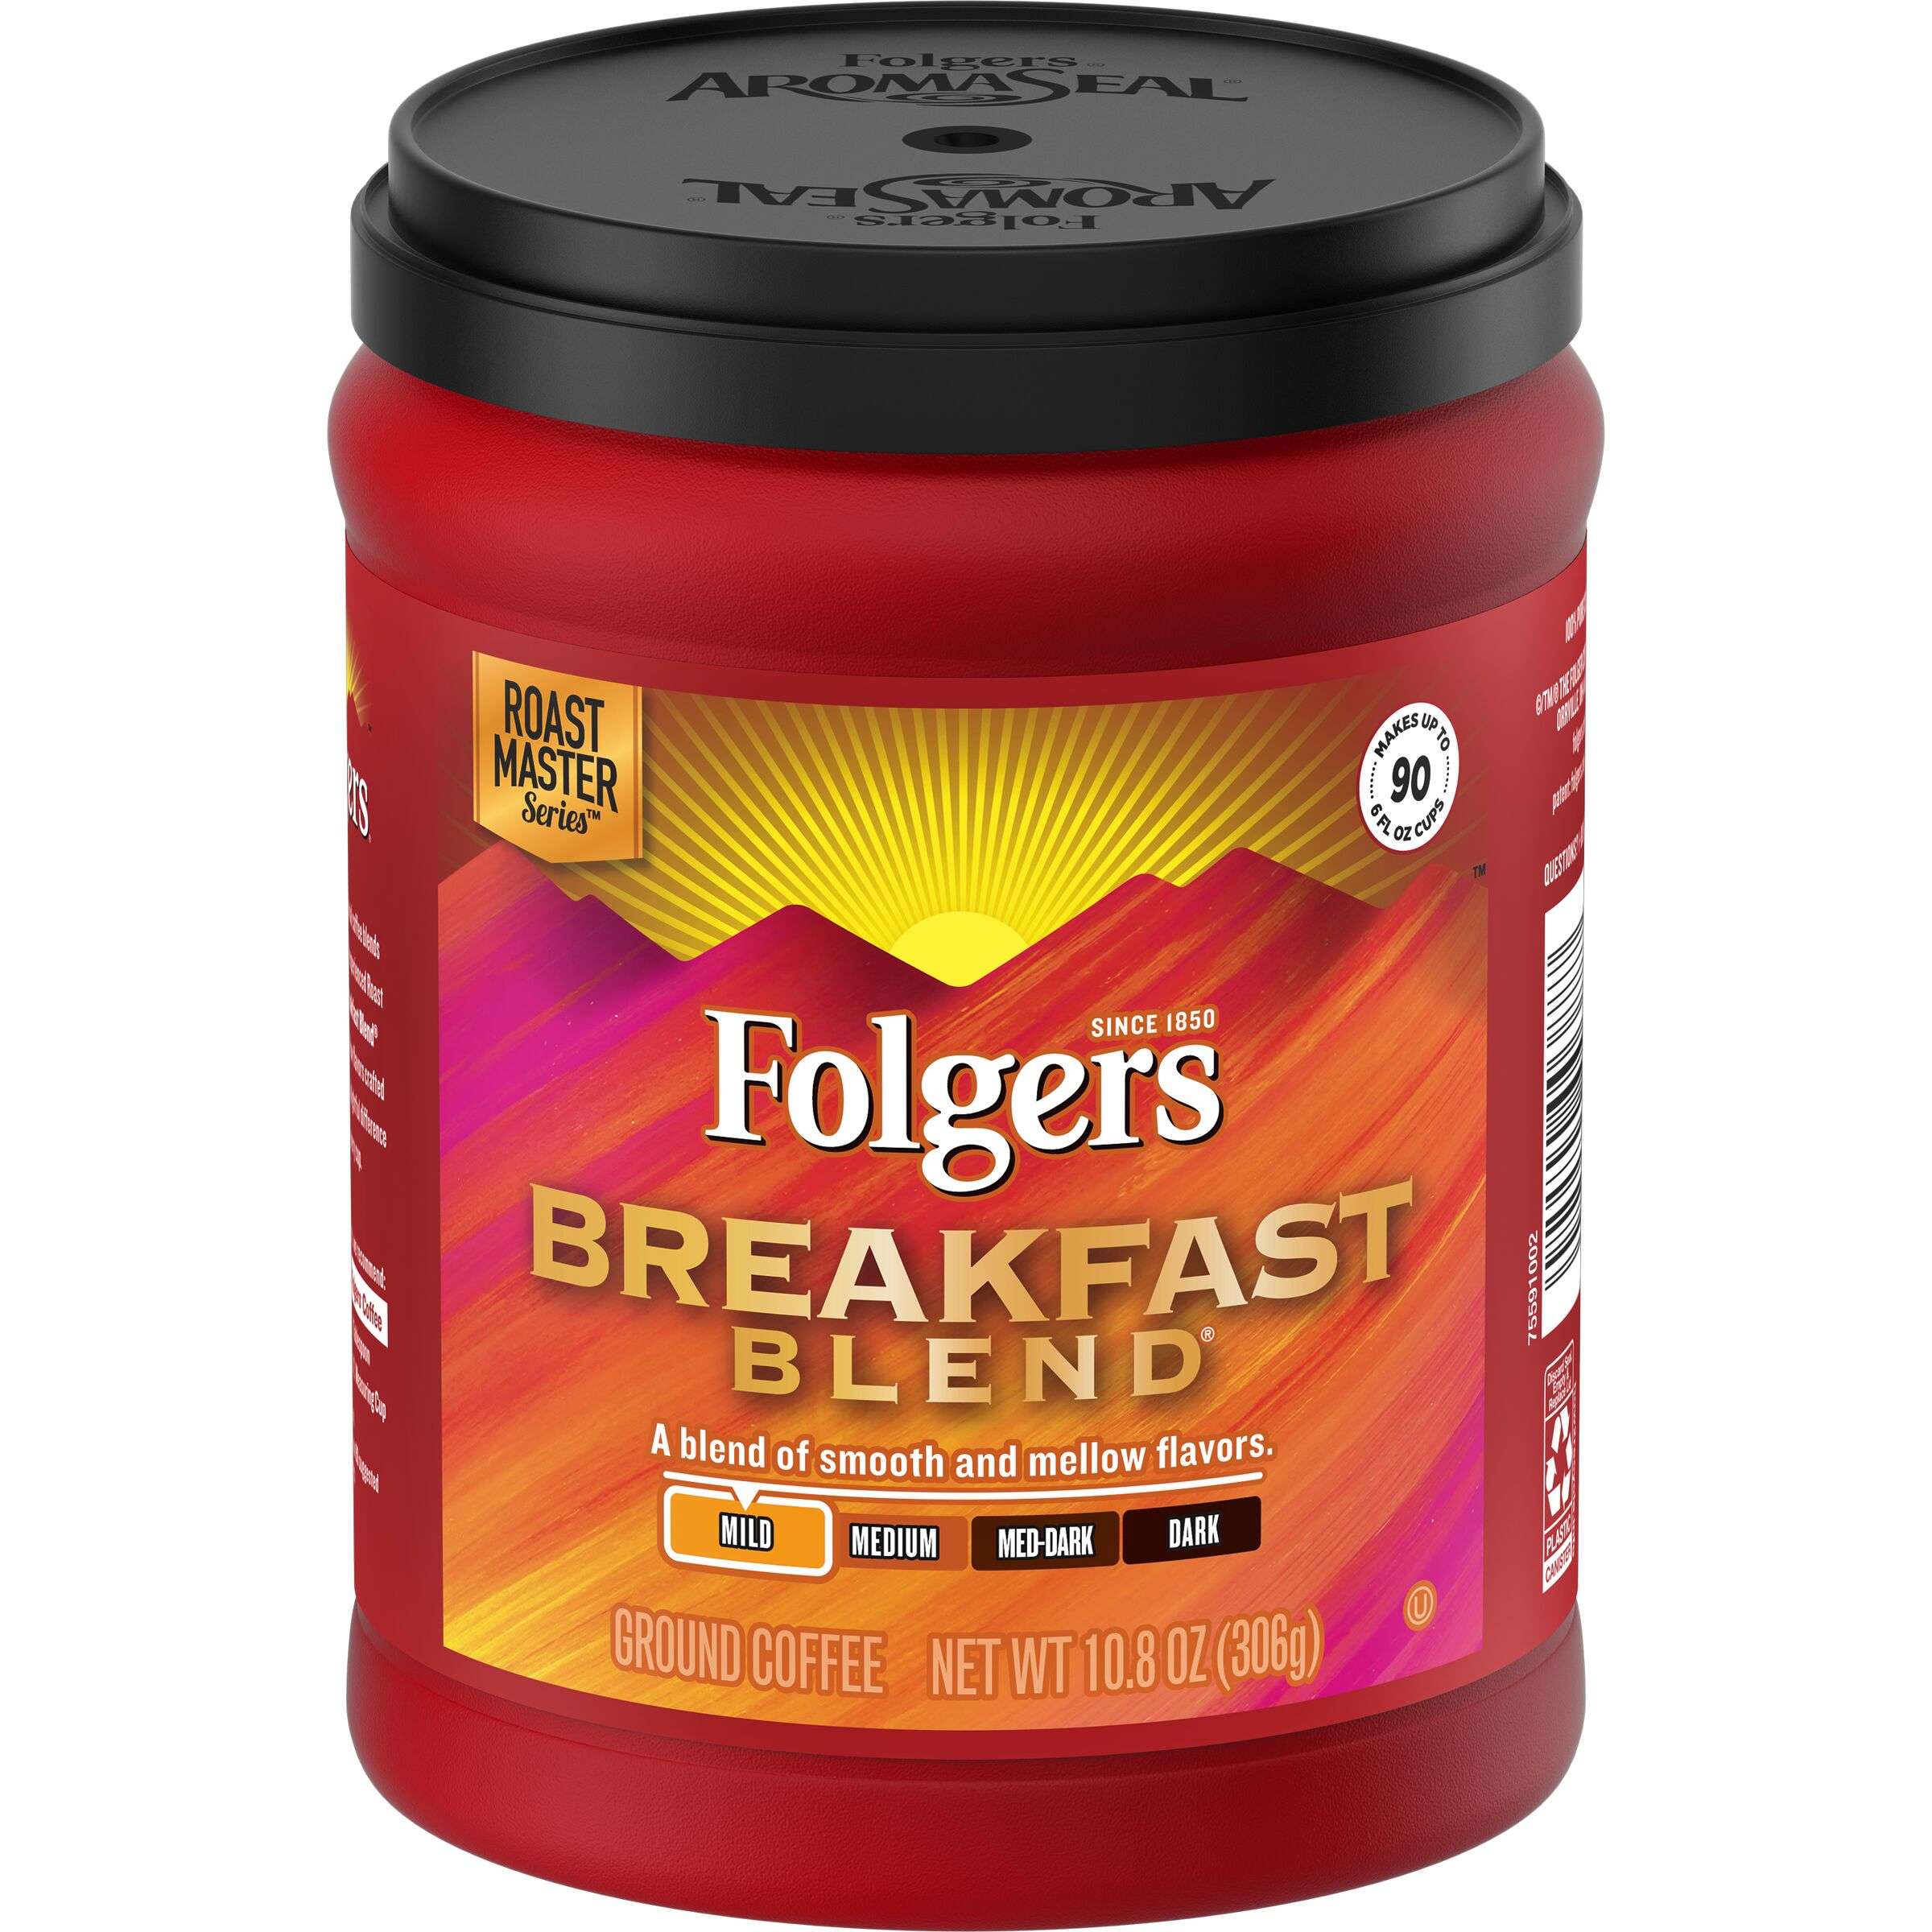 Folgers Breakfast Blend Ground Coffee, 10.8